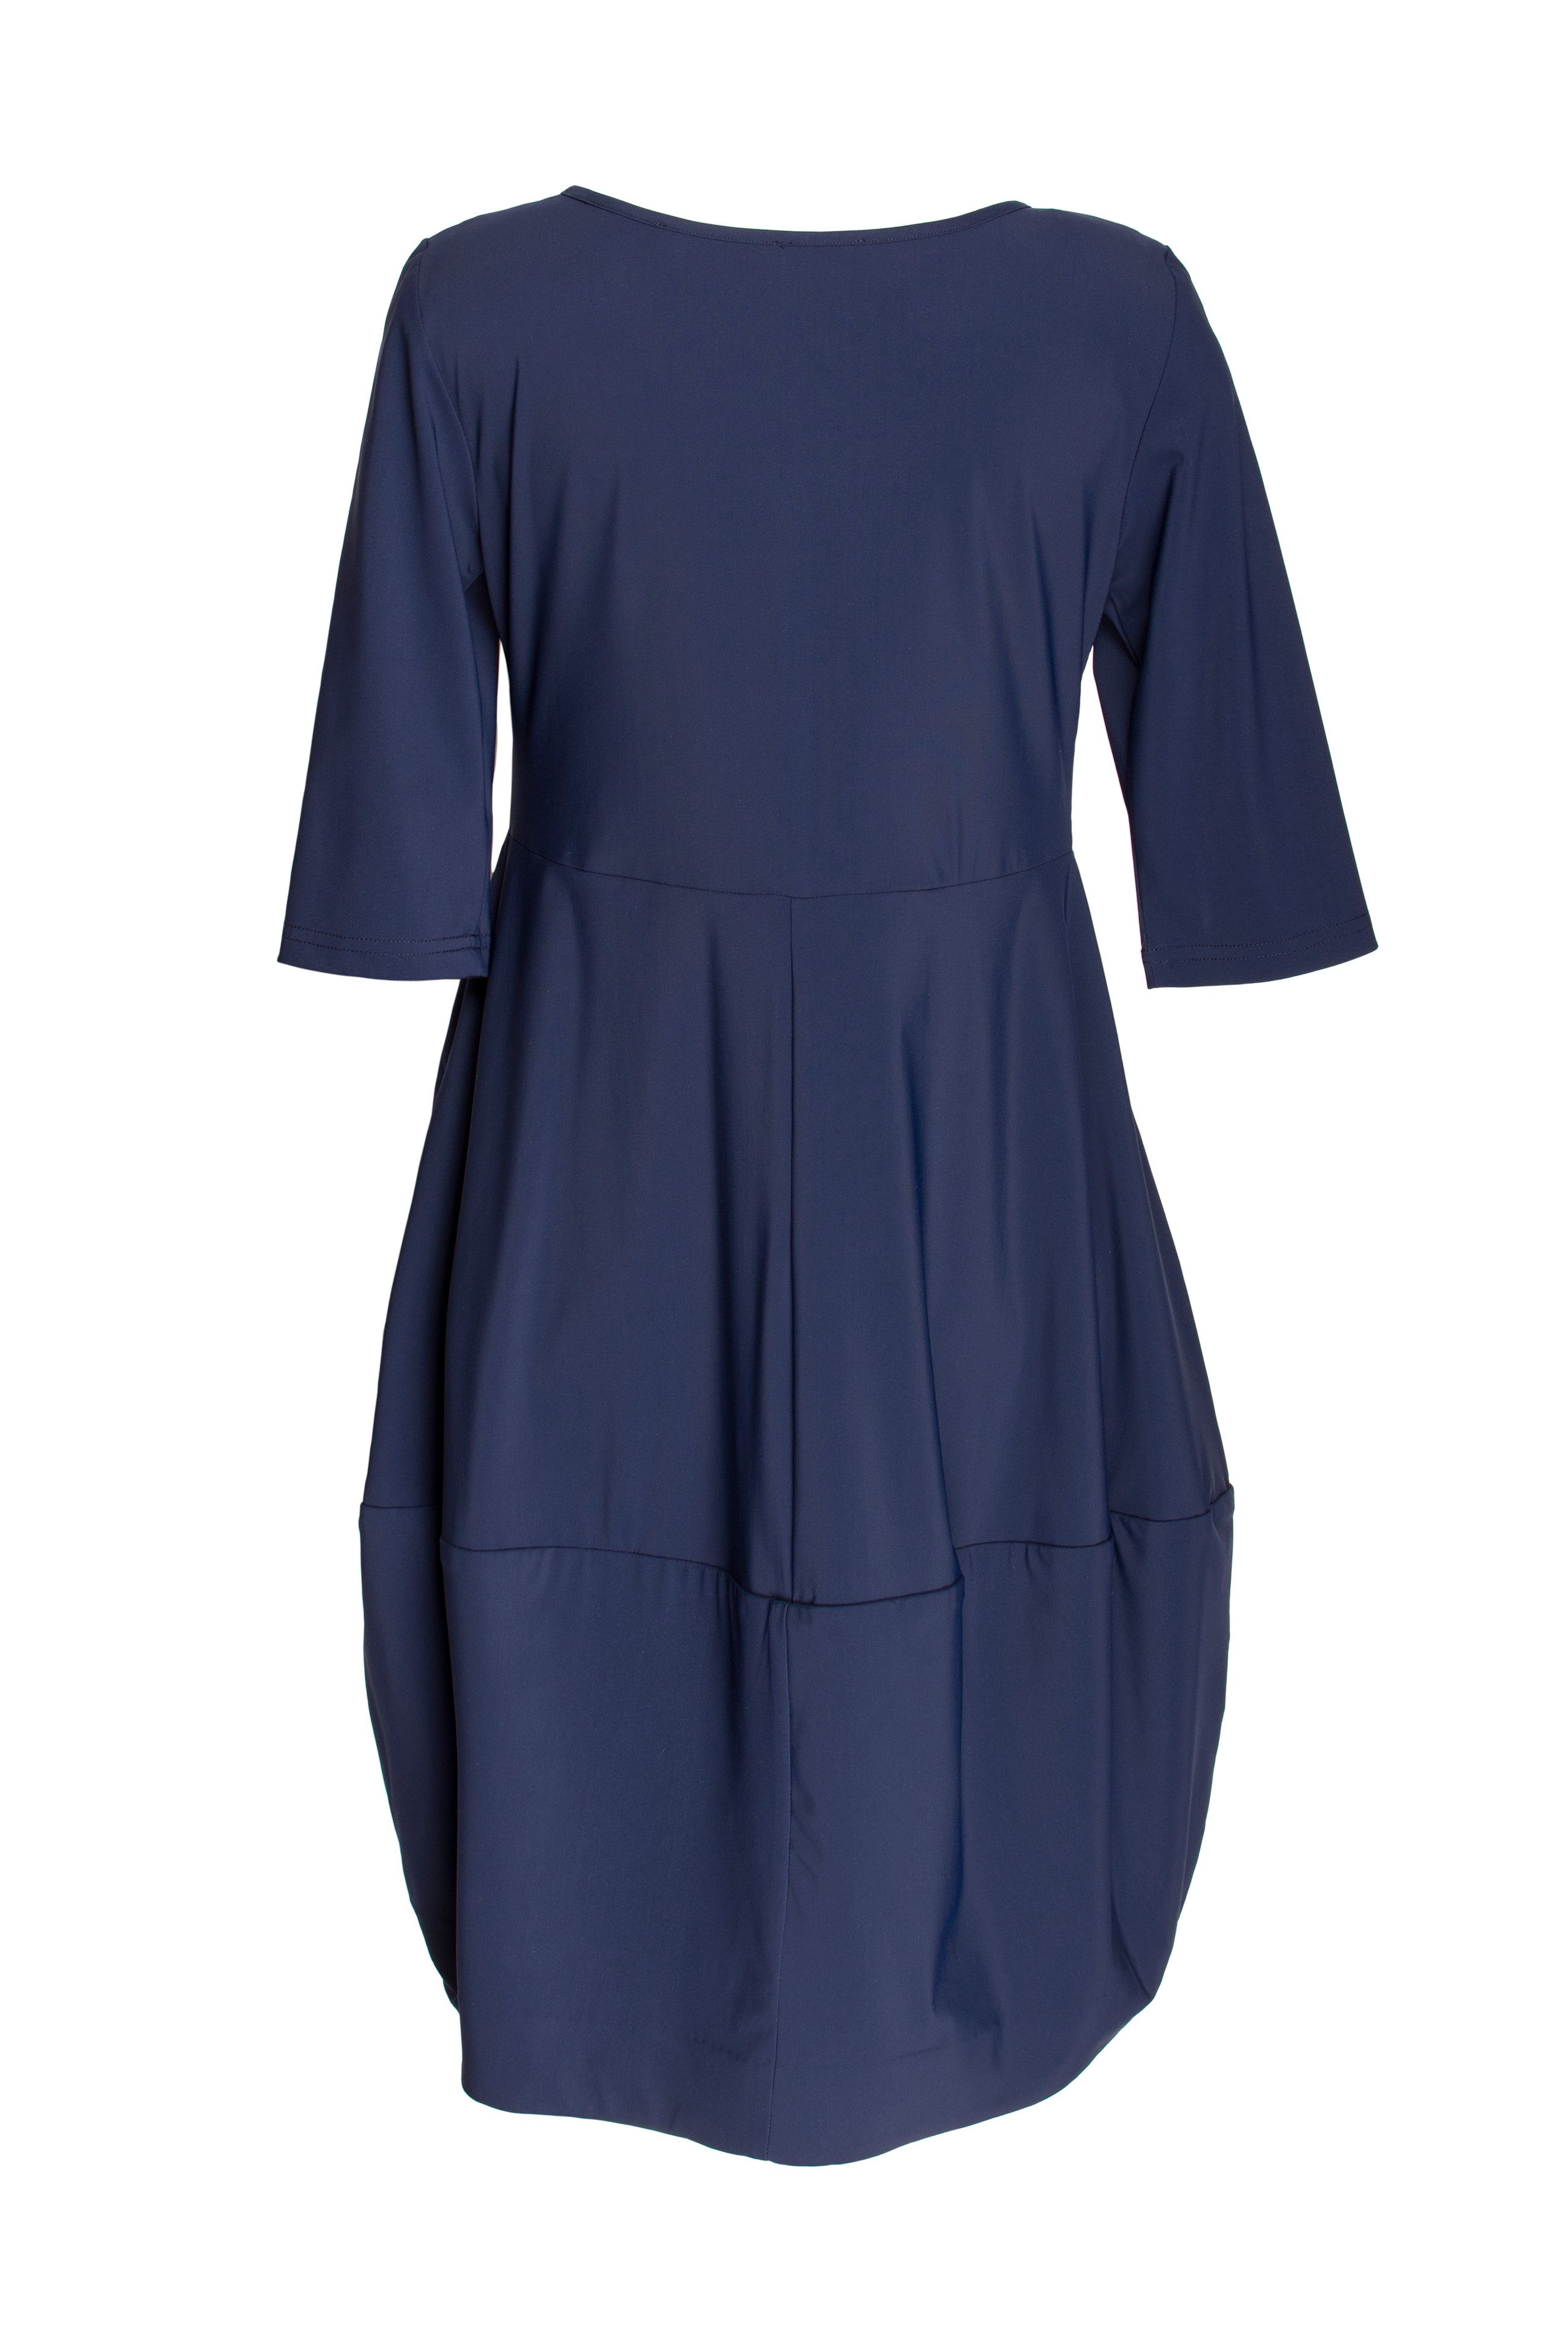 Short Sleeve Panel Hem Dress - Indigo Jersey 5043